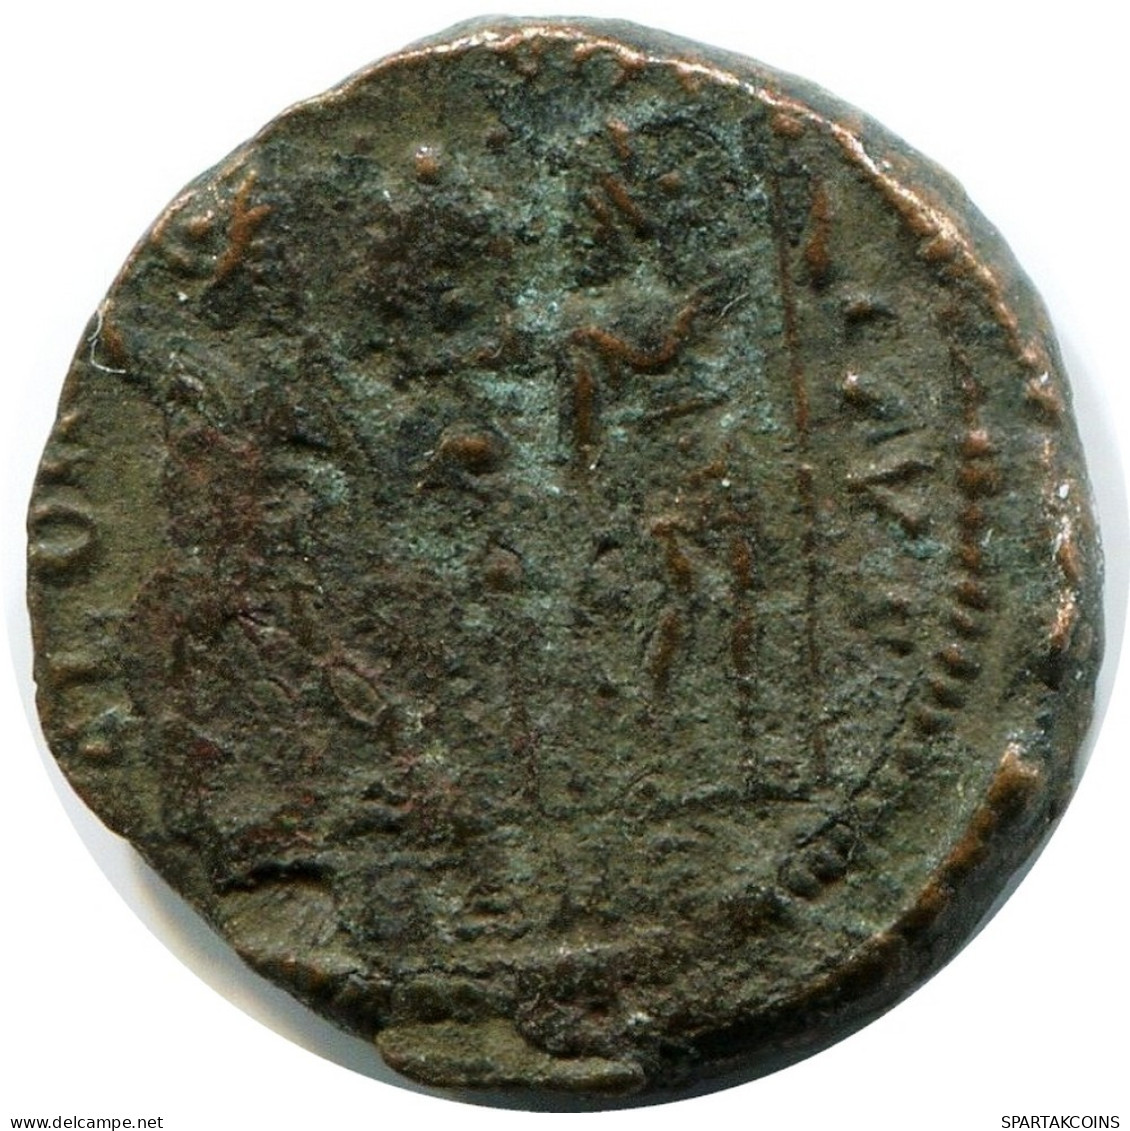 ROMAN Moneda MINTED IN ANTIOCH FOUND IN IHNASYAH HOARD EGYPT #ANC11278.14.E.A - El Imperio Christiano (307 / 363)